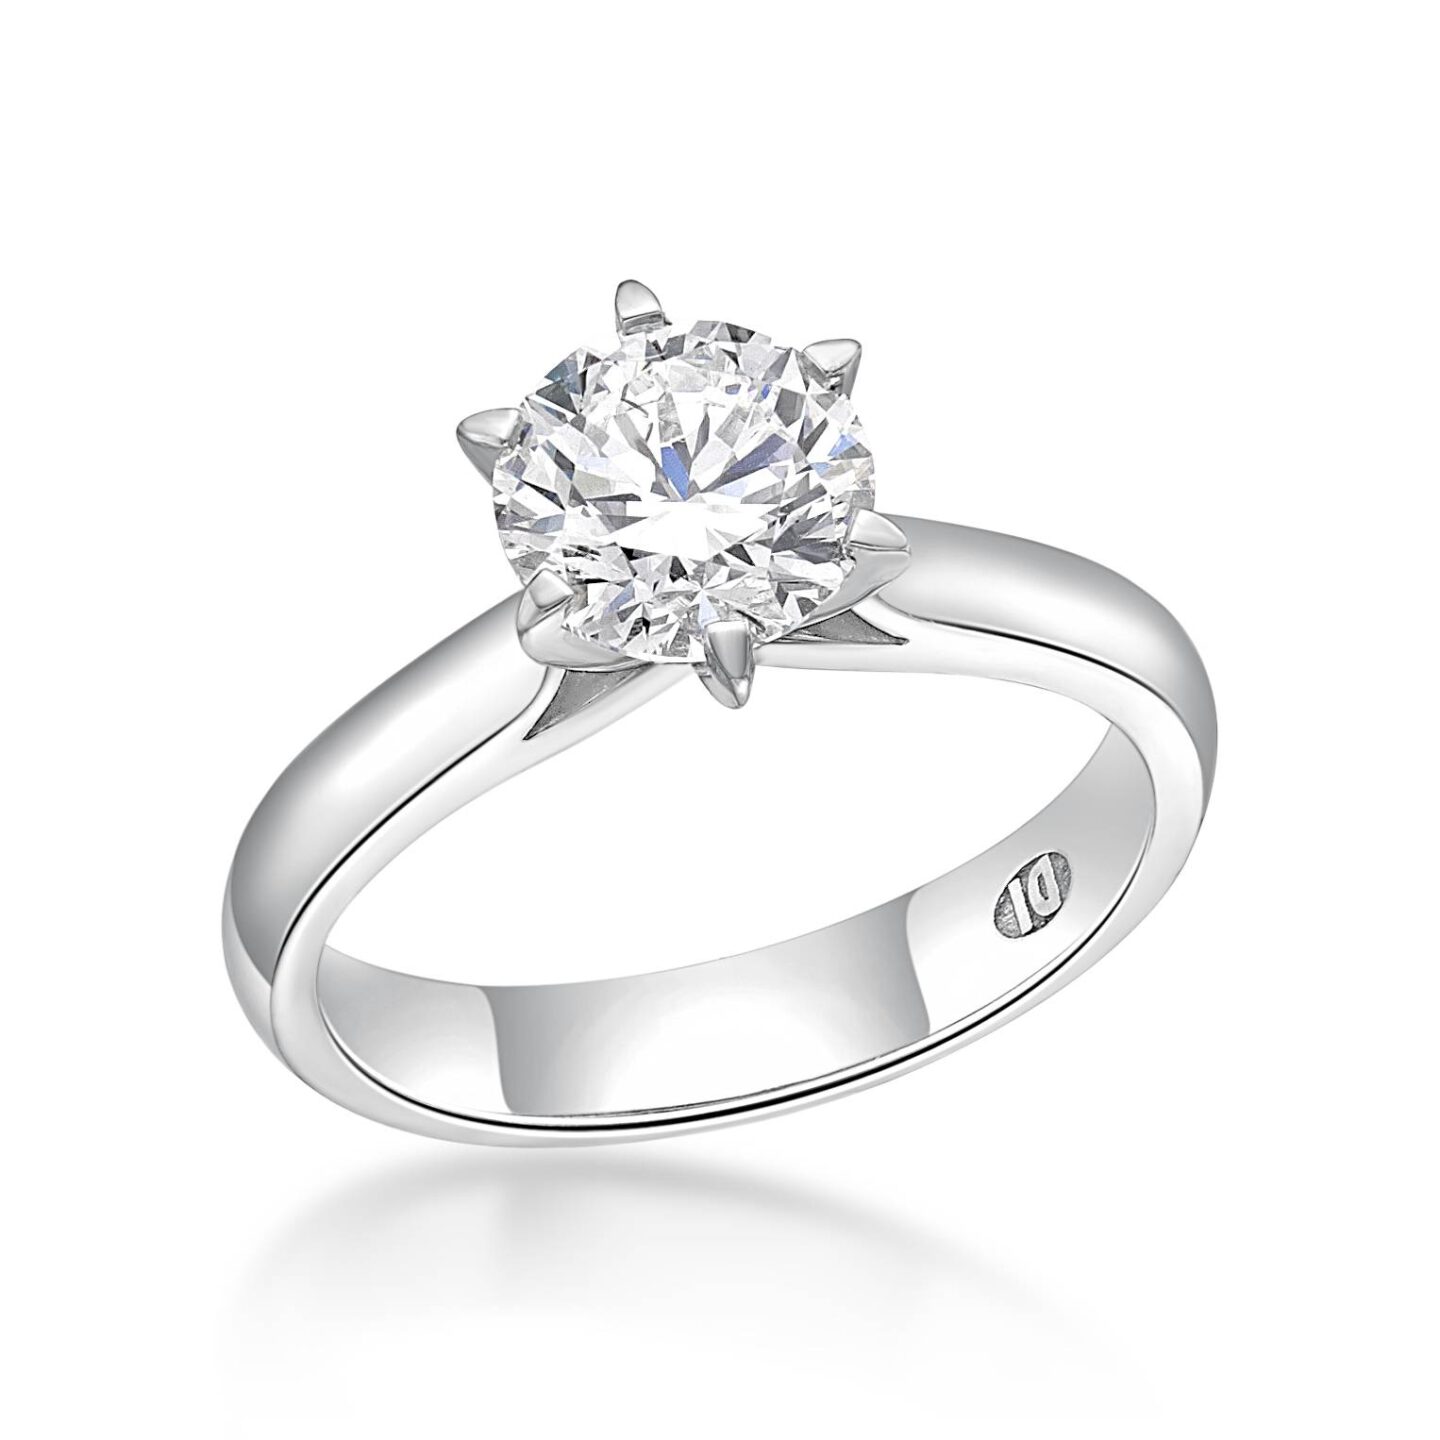 Janna – Round Brilliant Solitaire Diamond Engagement Ring